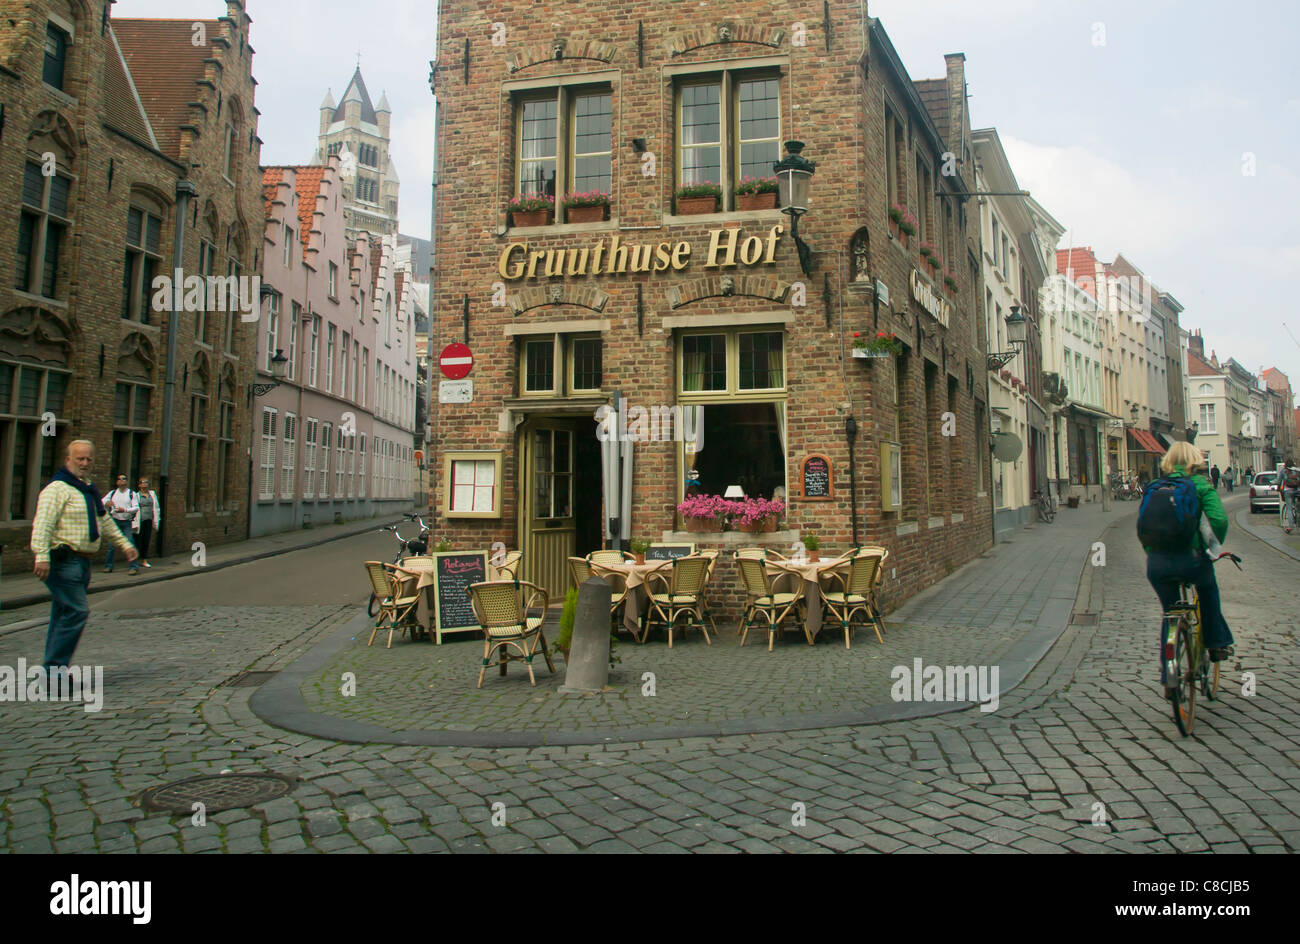 The Gruuthuse Hof, a restaurant in Bruges, West Flanders, Belgium. Stock Photo